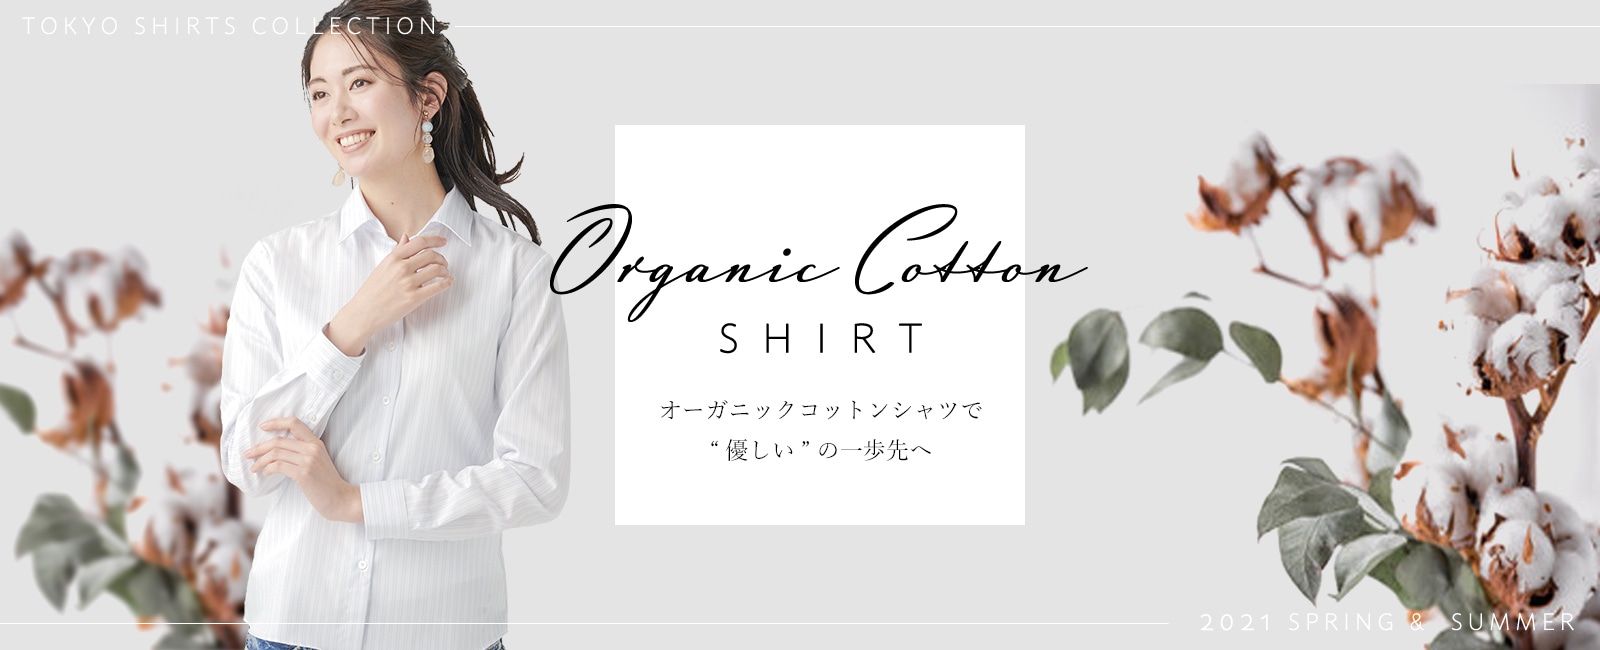 Organic Cotton SHIRT オーガニックコットンシャツで”優しい”の一歩先へ　TOKYO SHIRT COLLECTION 2021SPRING & SUMMER